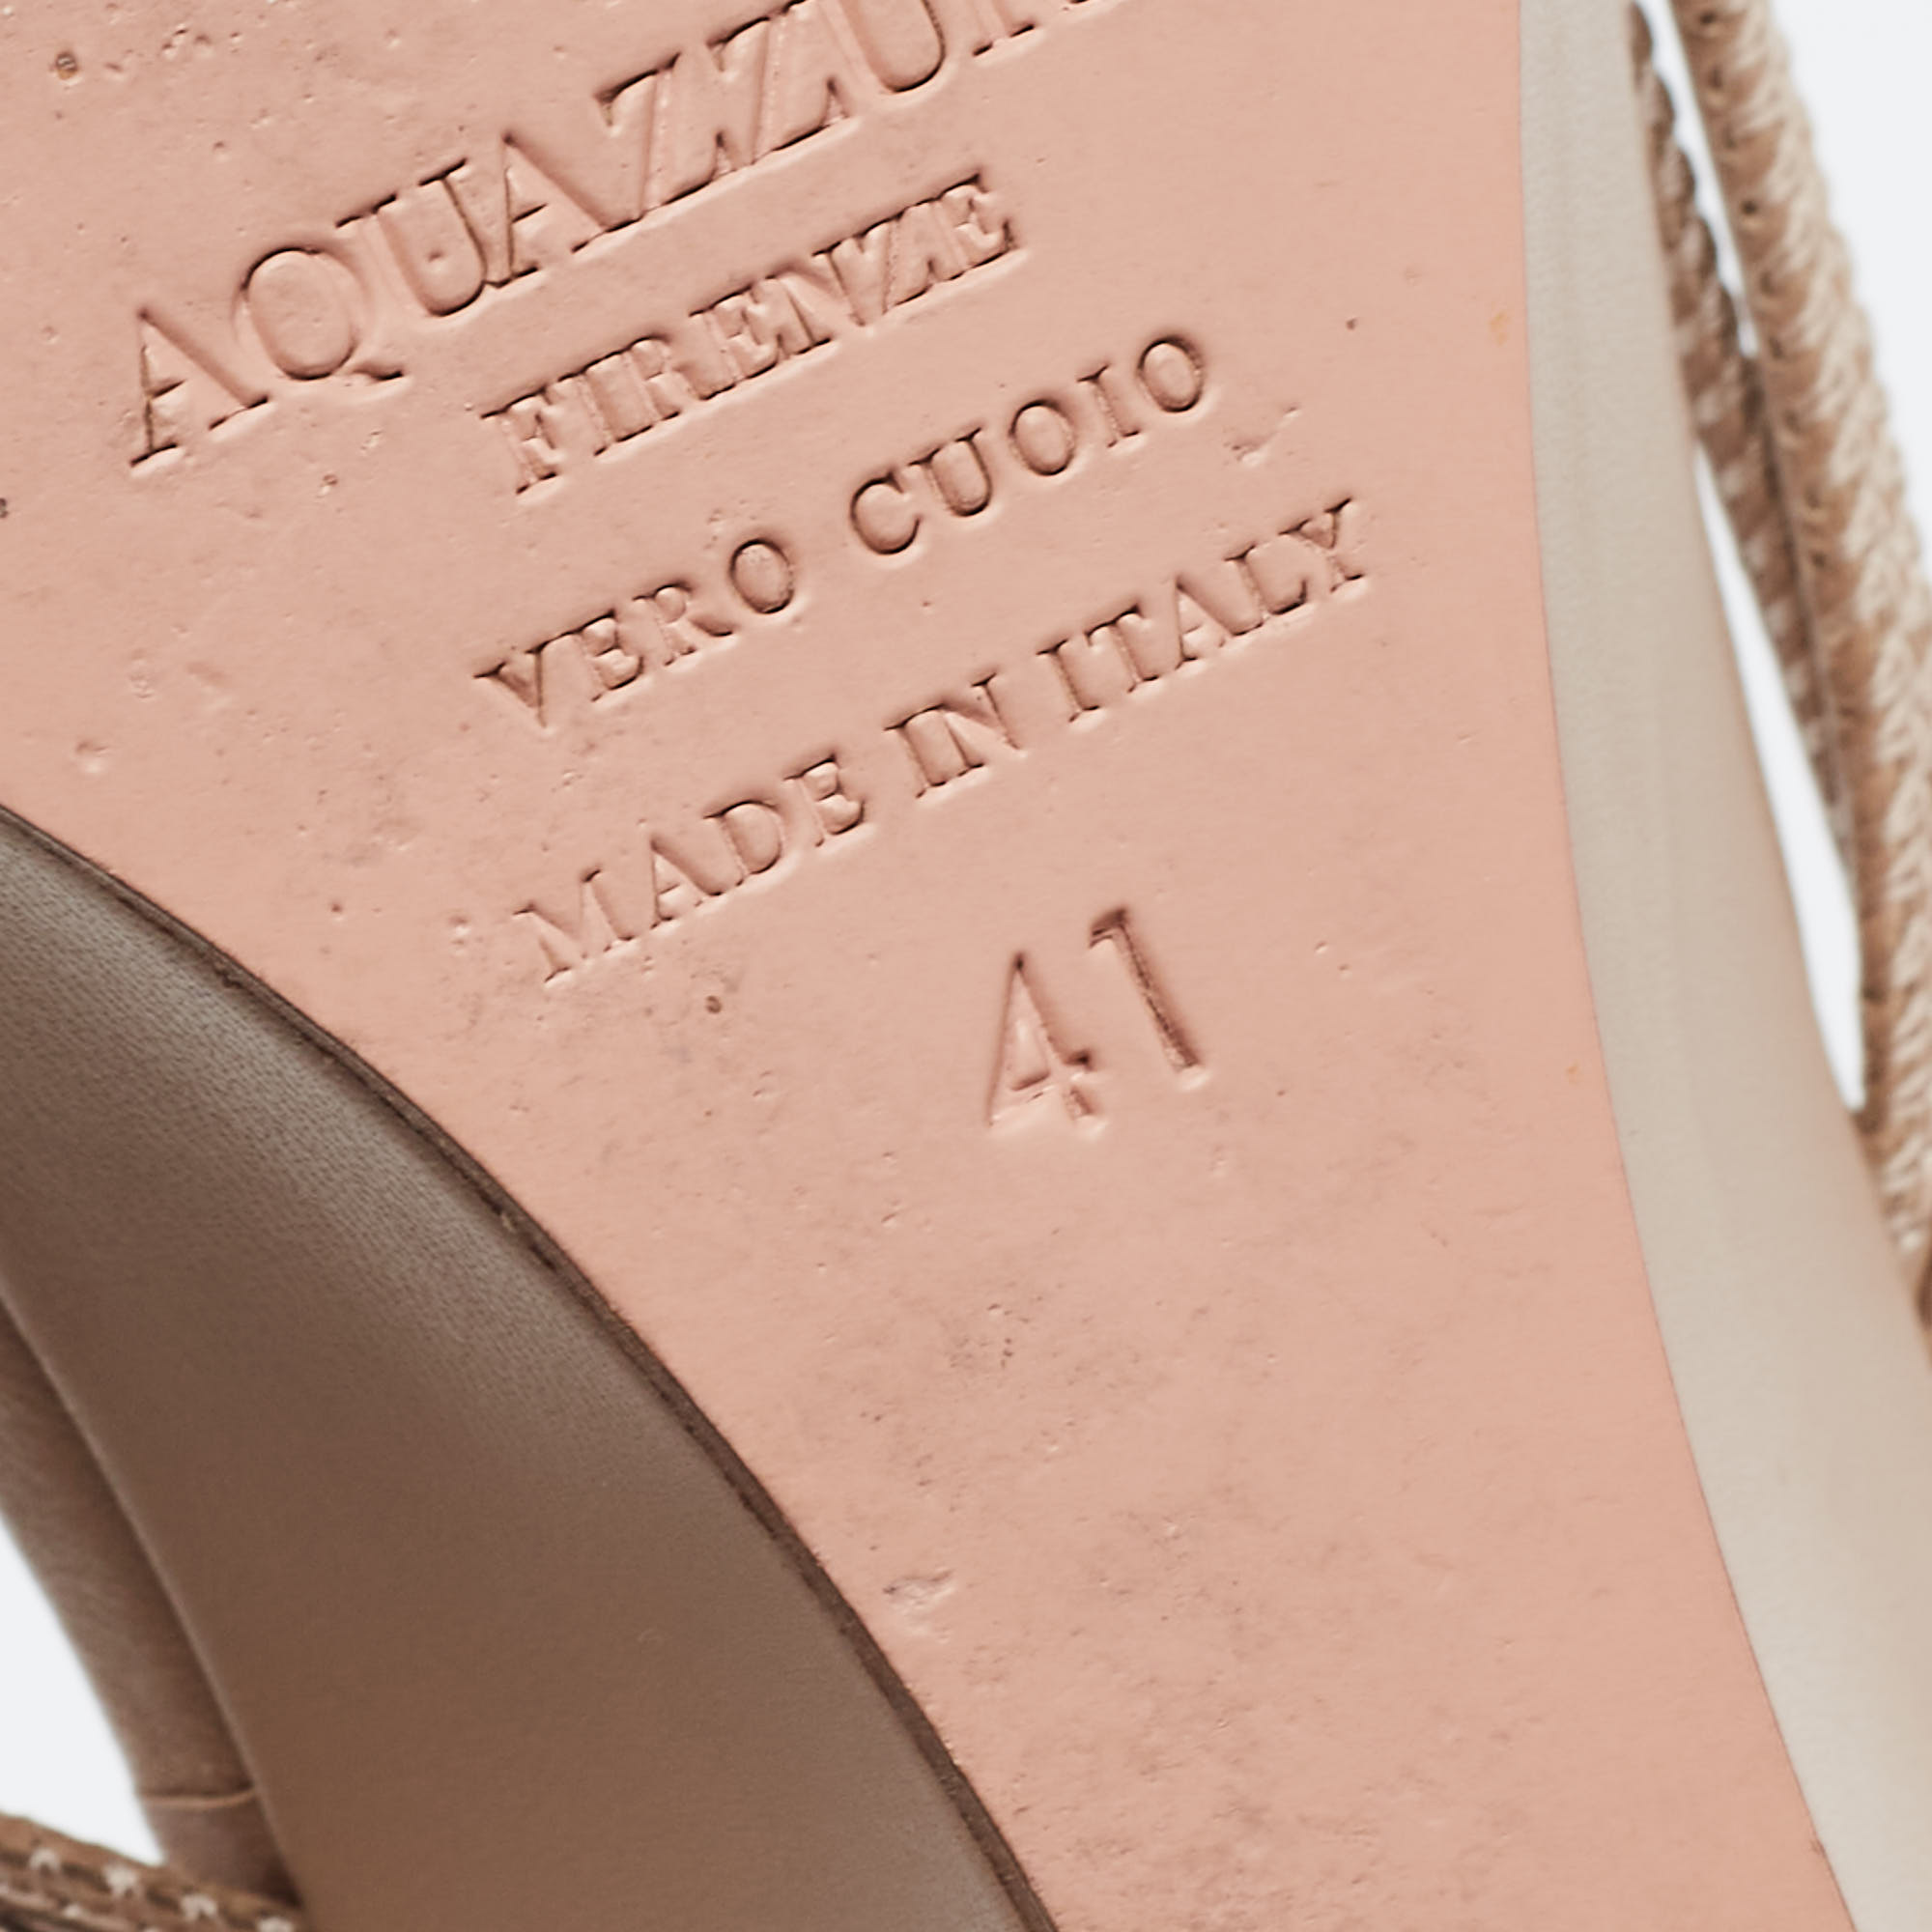 Aquazzura Beige Leather Pedi Wedge Sandals Size 41